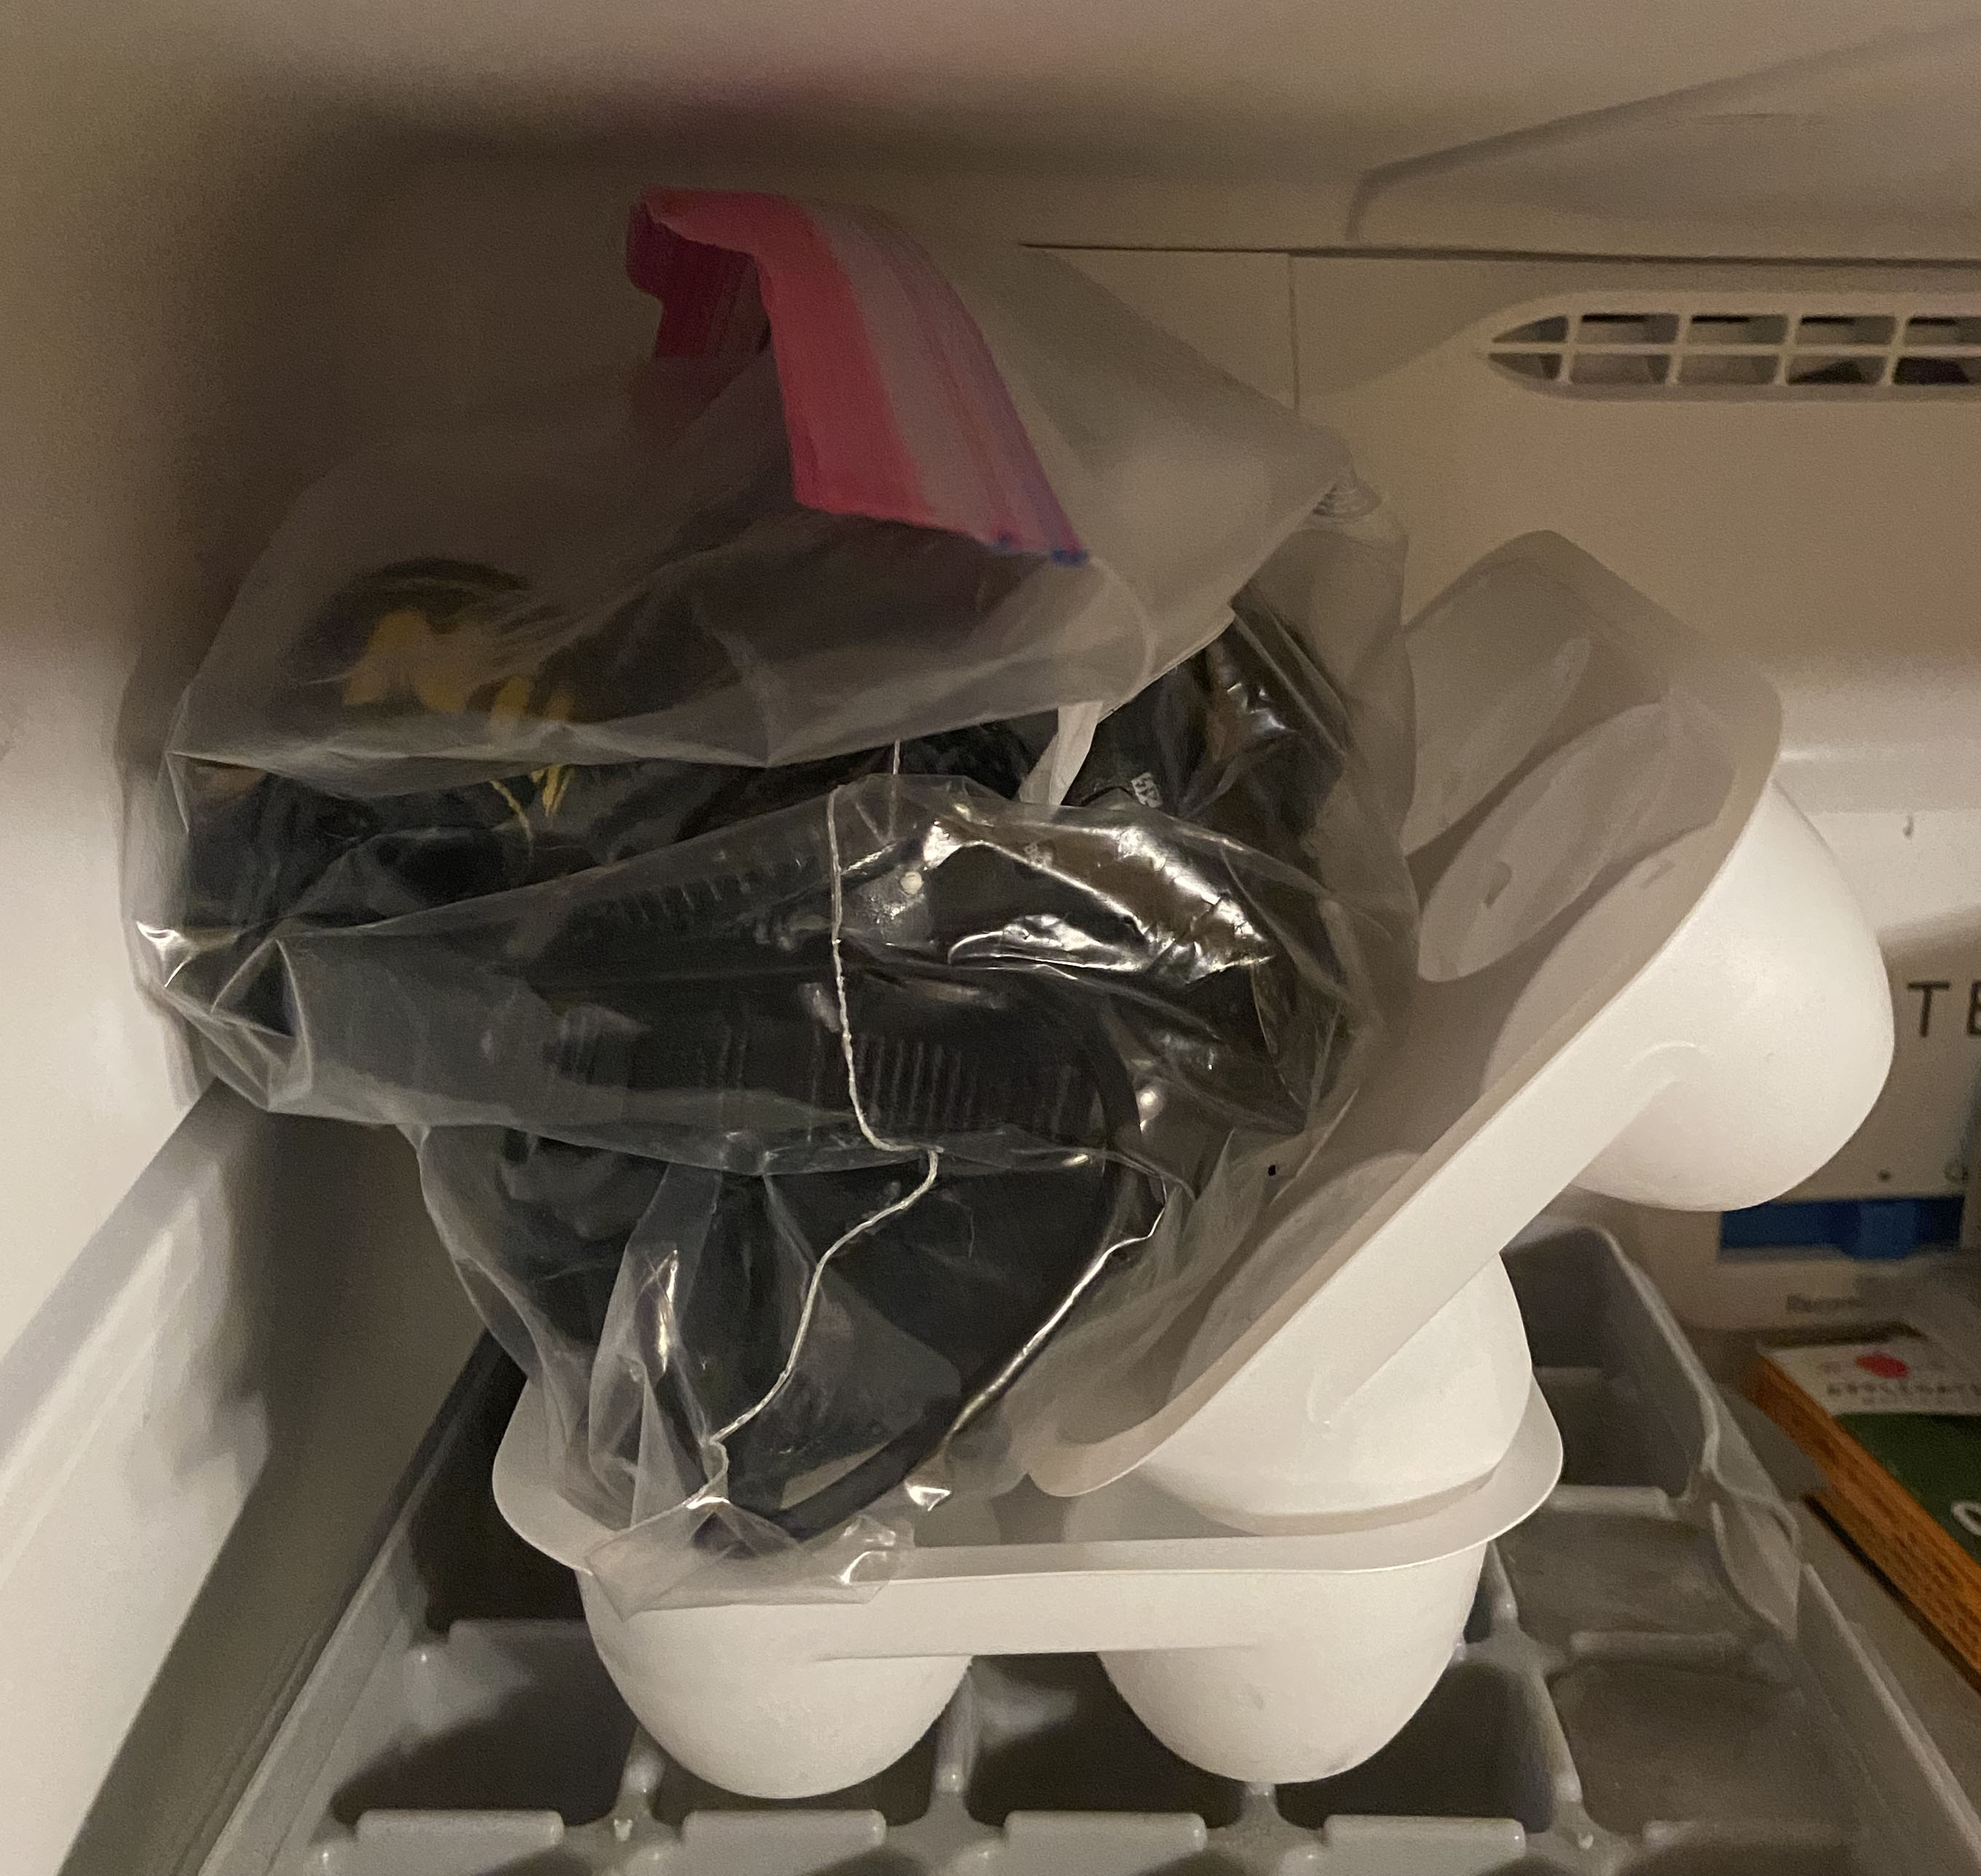 camera, in ziploc bag, in freezer